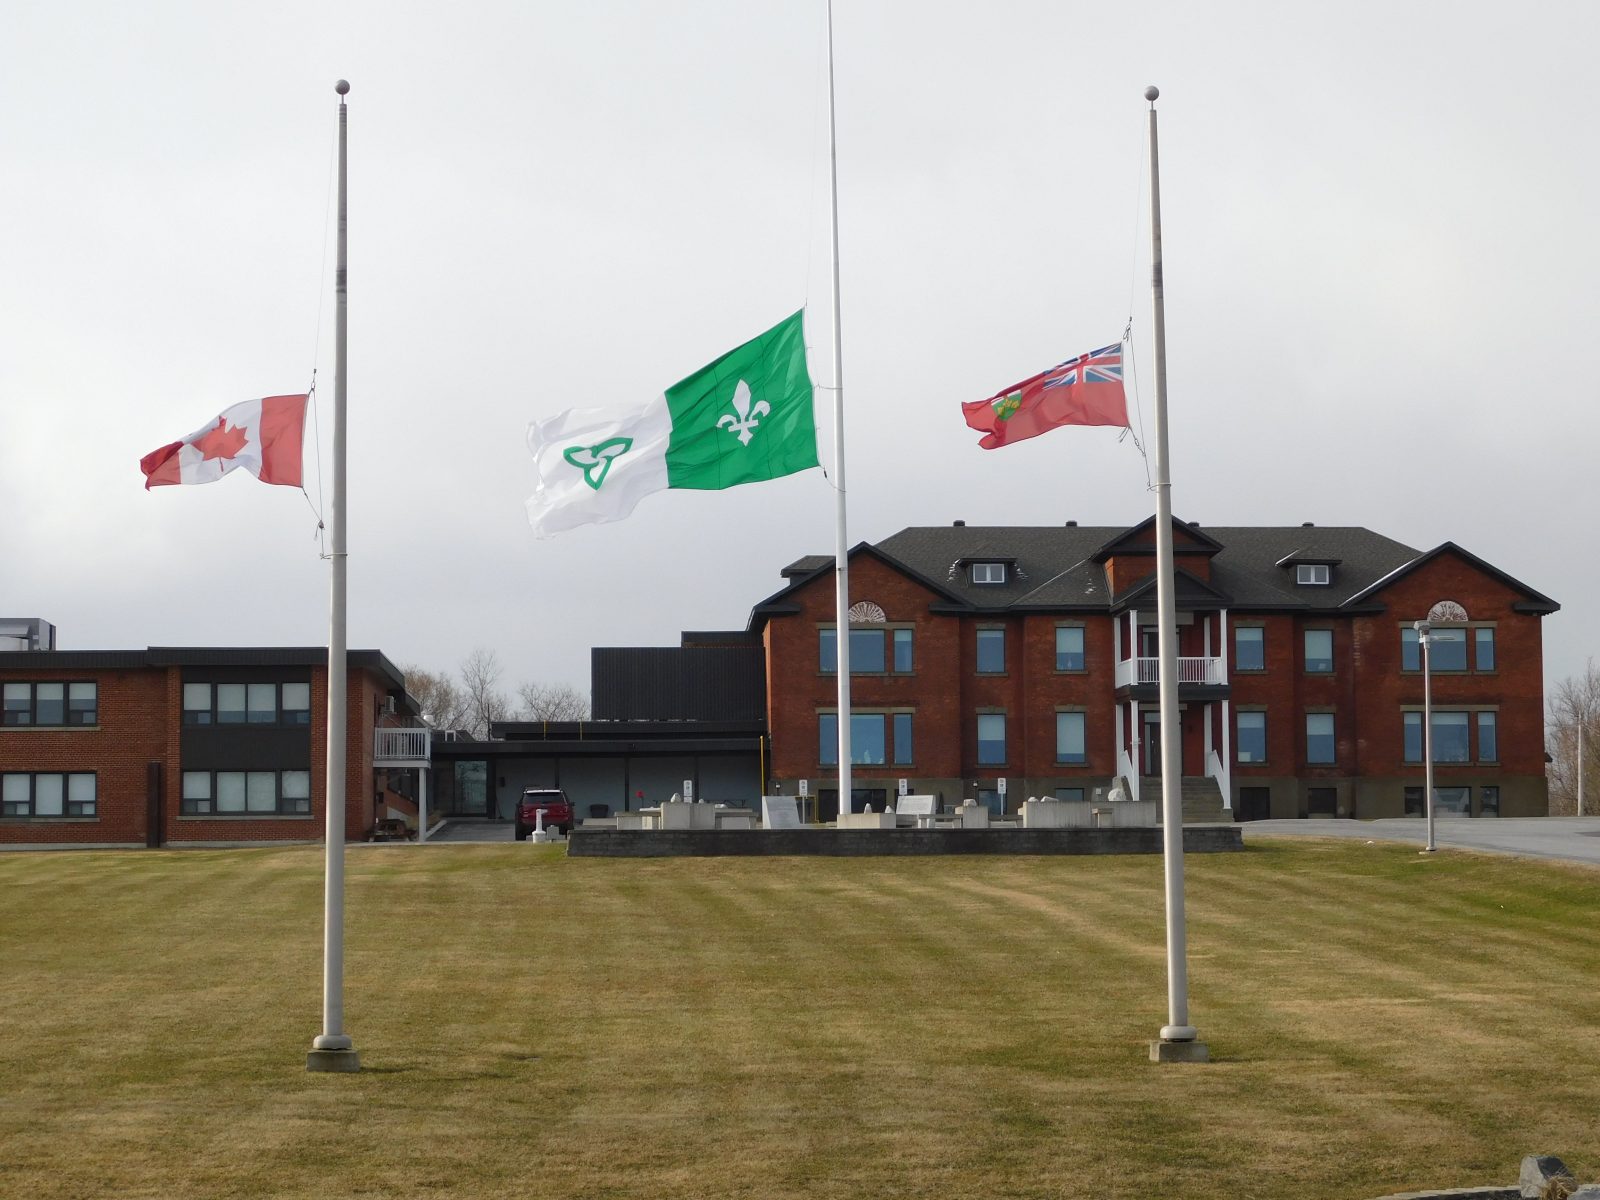 Prescott-Russell mourns for Nova Scotia shooting tragedy